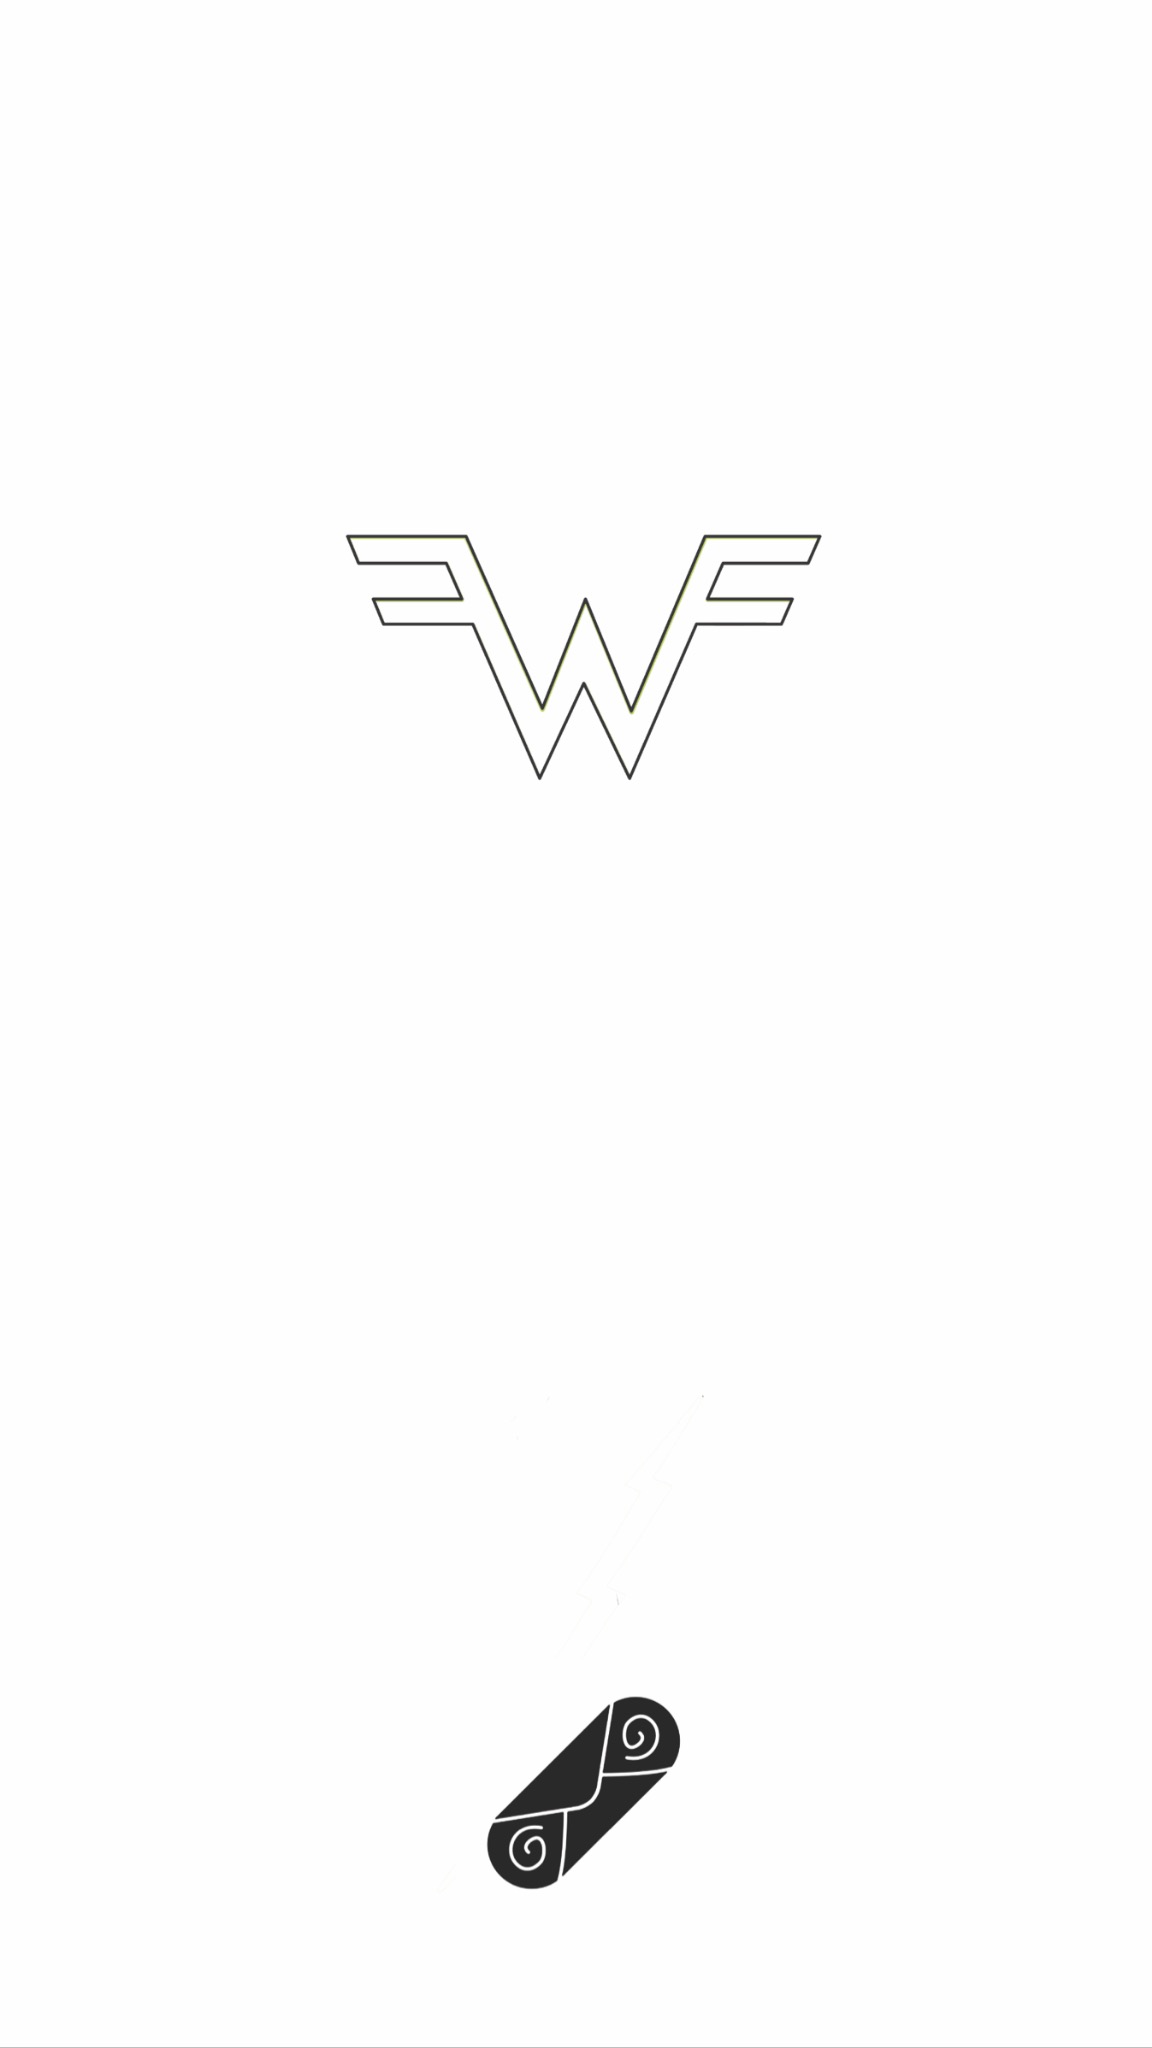 Favorite WEEZER album 3 Pinkerton  Cool art Weezer Sounds like